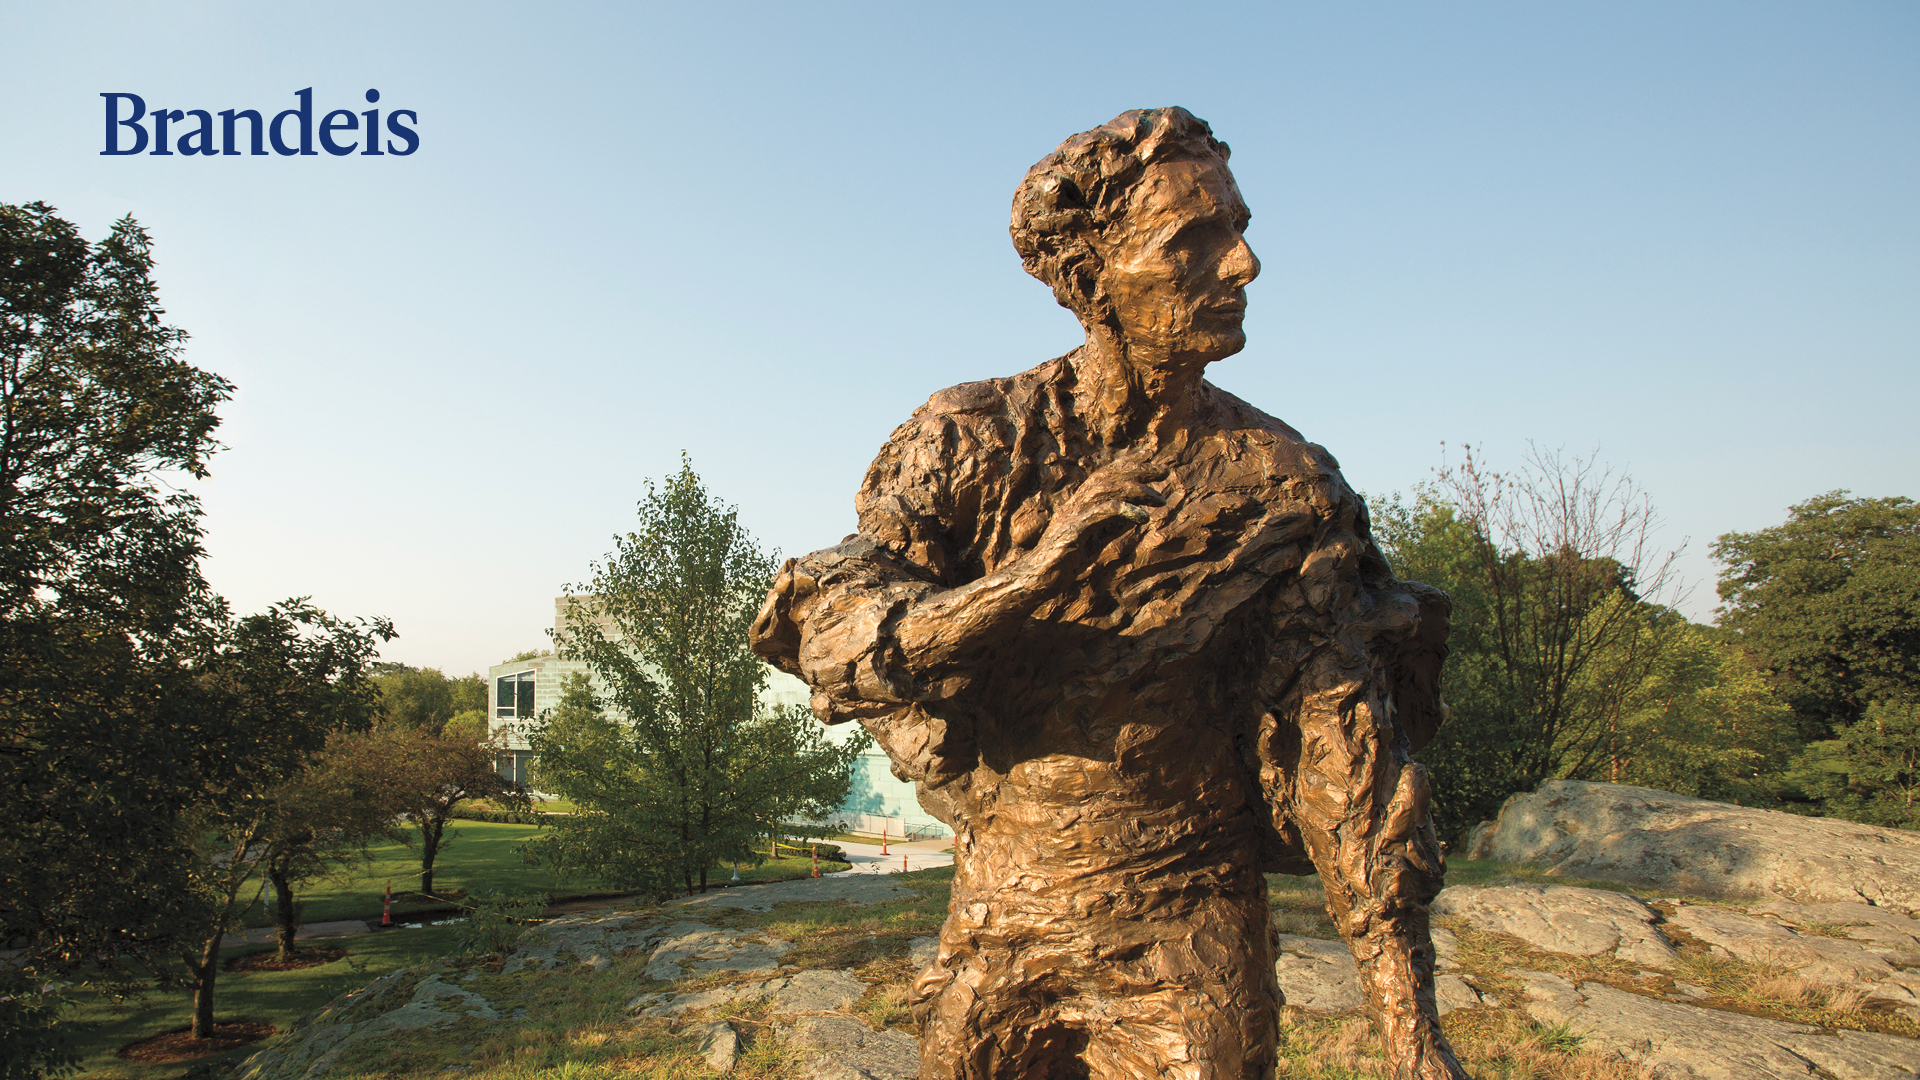 The Louis Brandeis statue overlooking campus